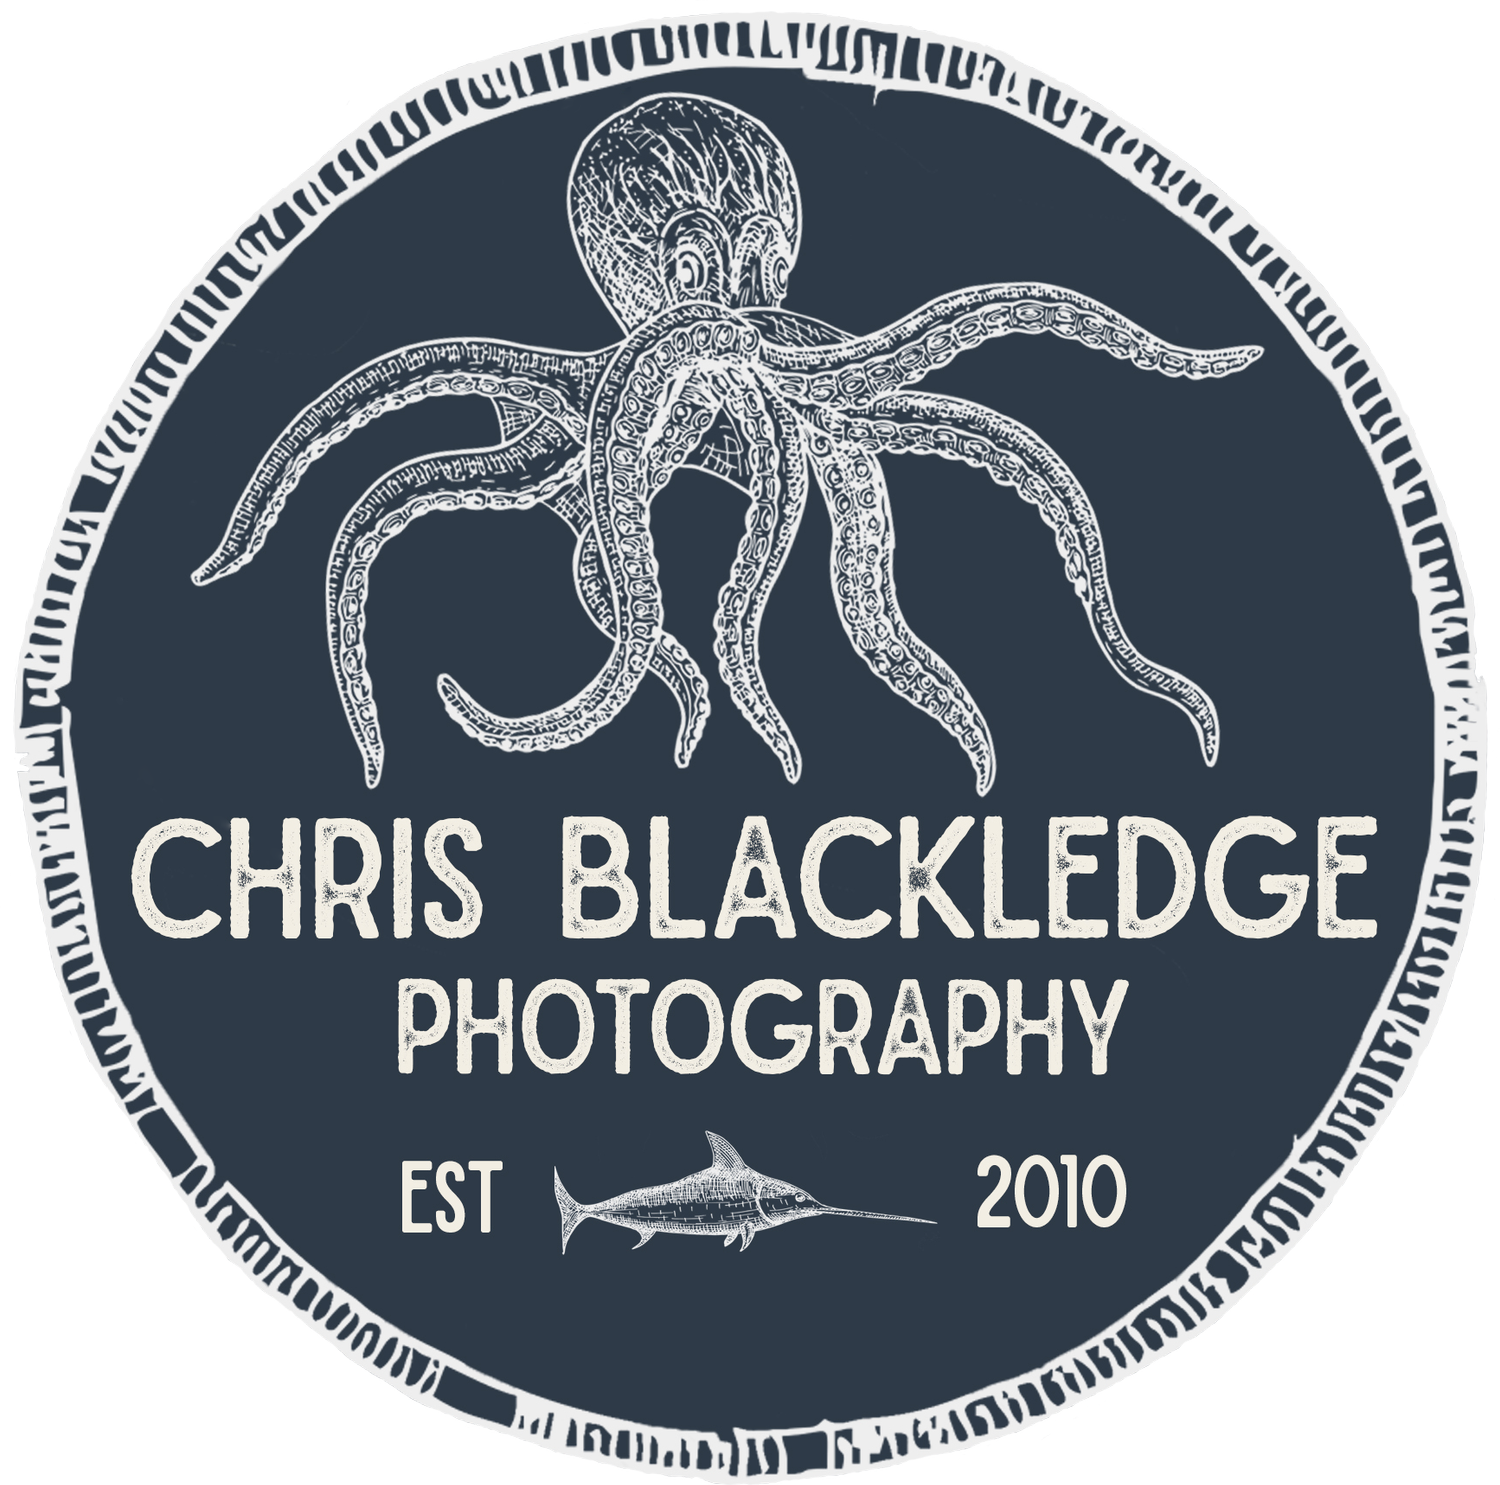 Chris Blackledge Photography